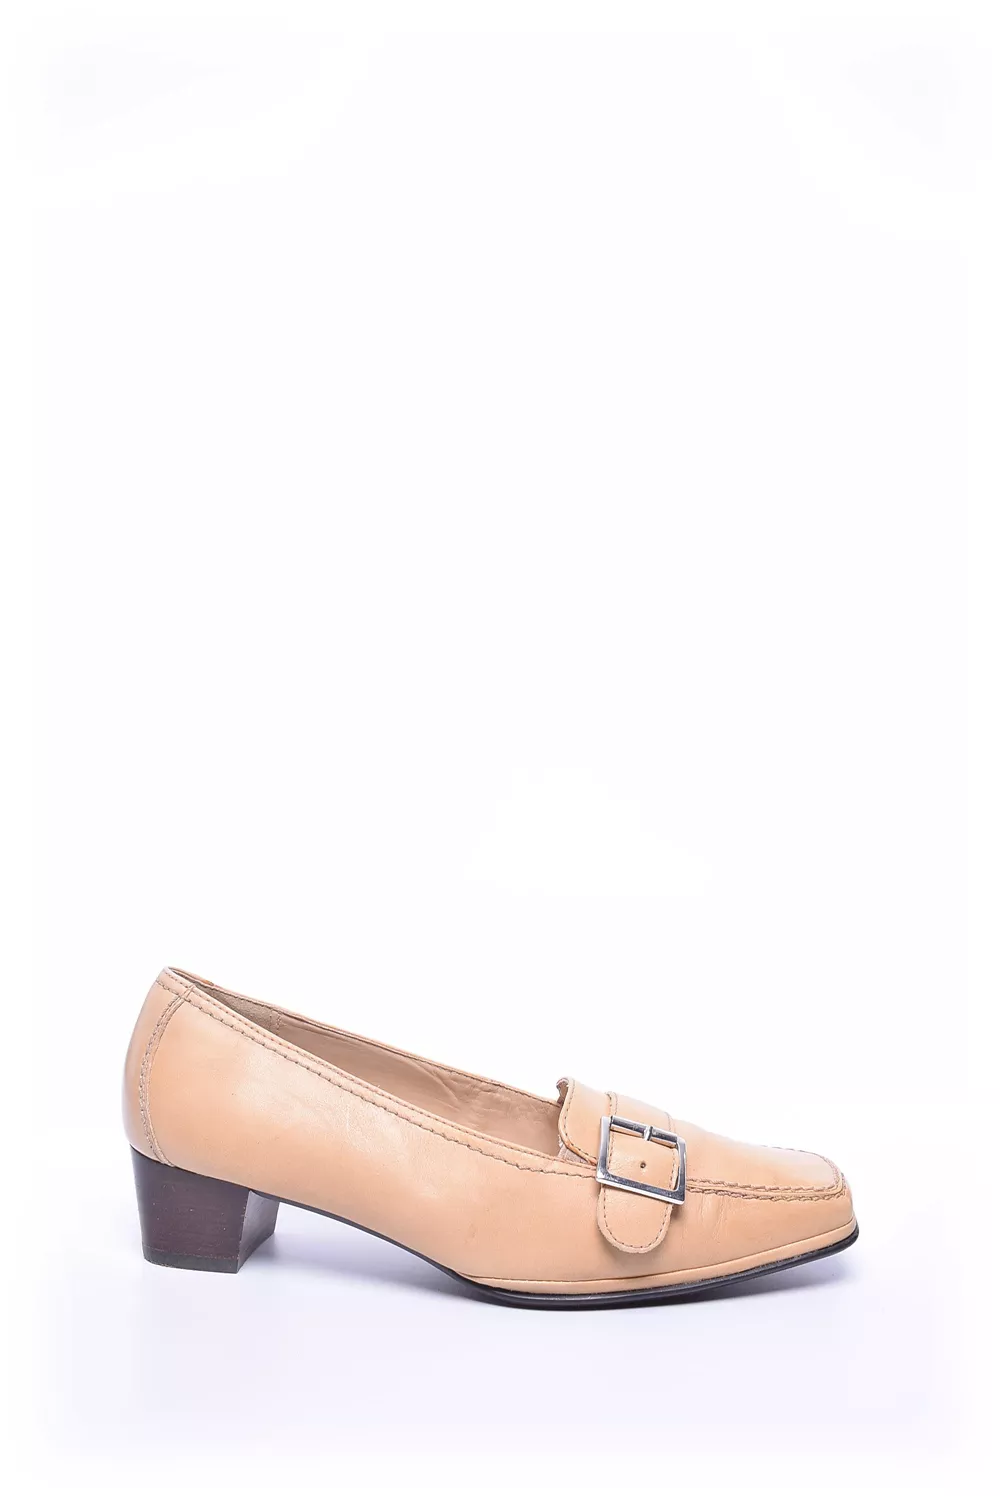 Pantofi vintage dama [1]